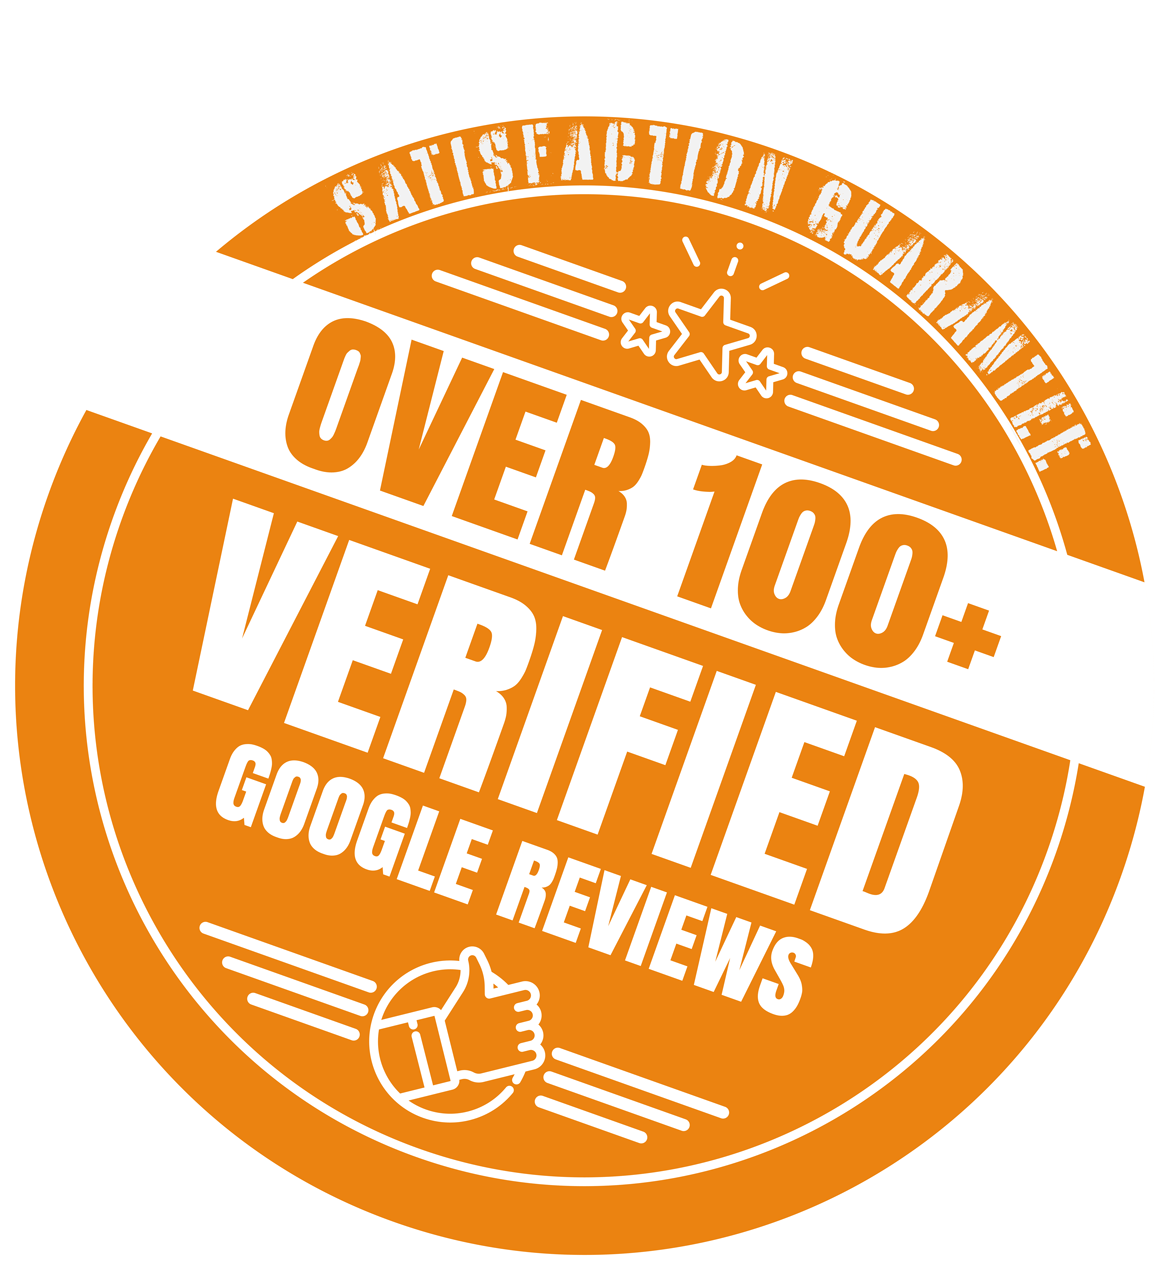 over 100 verified reviews